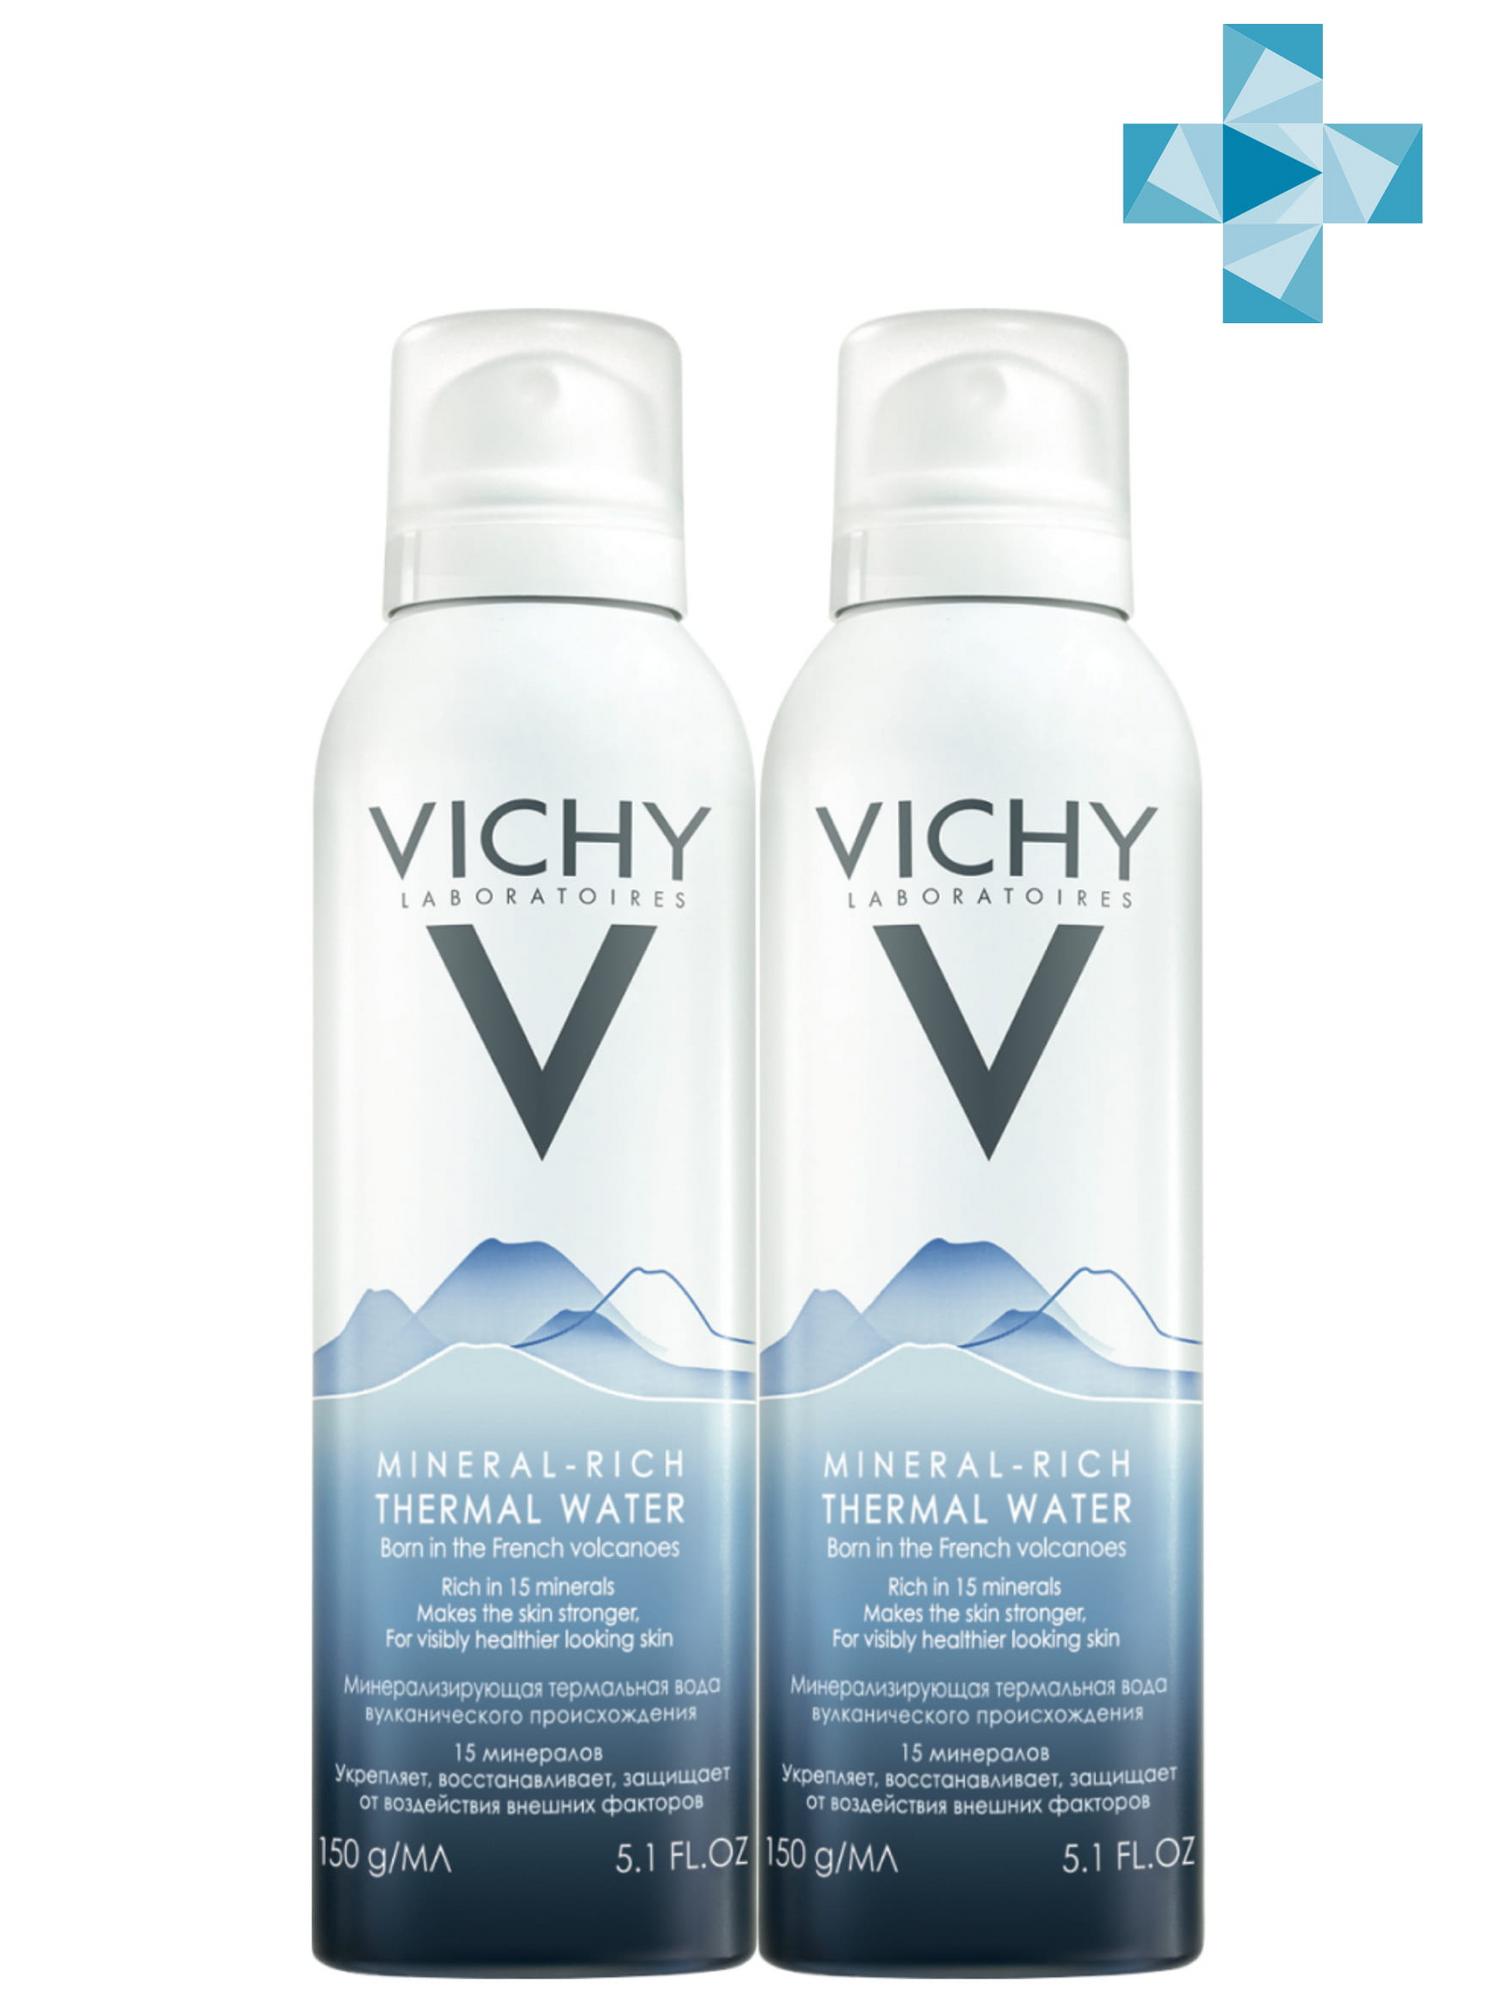 Vichy Комплект Термальная Вода Vichy Спа, 2 шт. по 150 мл (V